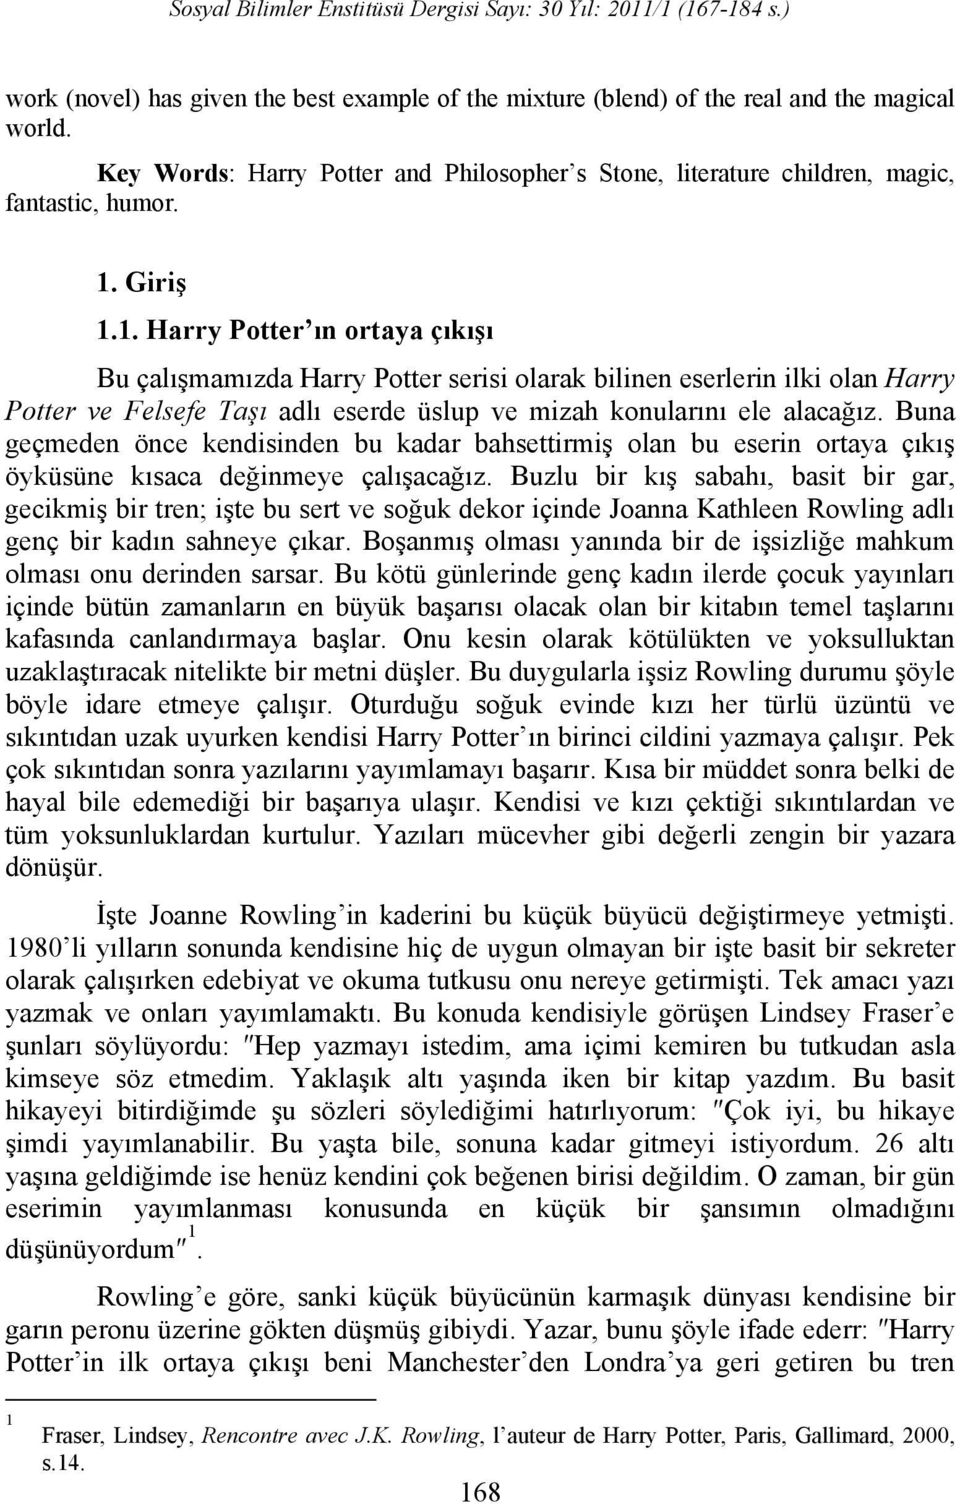 HARRY POTTER VE FELSEFE TAŞI NDA ÜSLÛP VE MİZAH - PDF Free Download